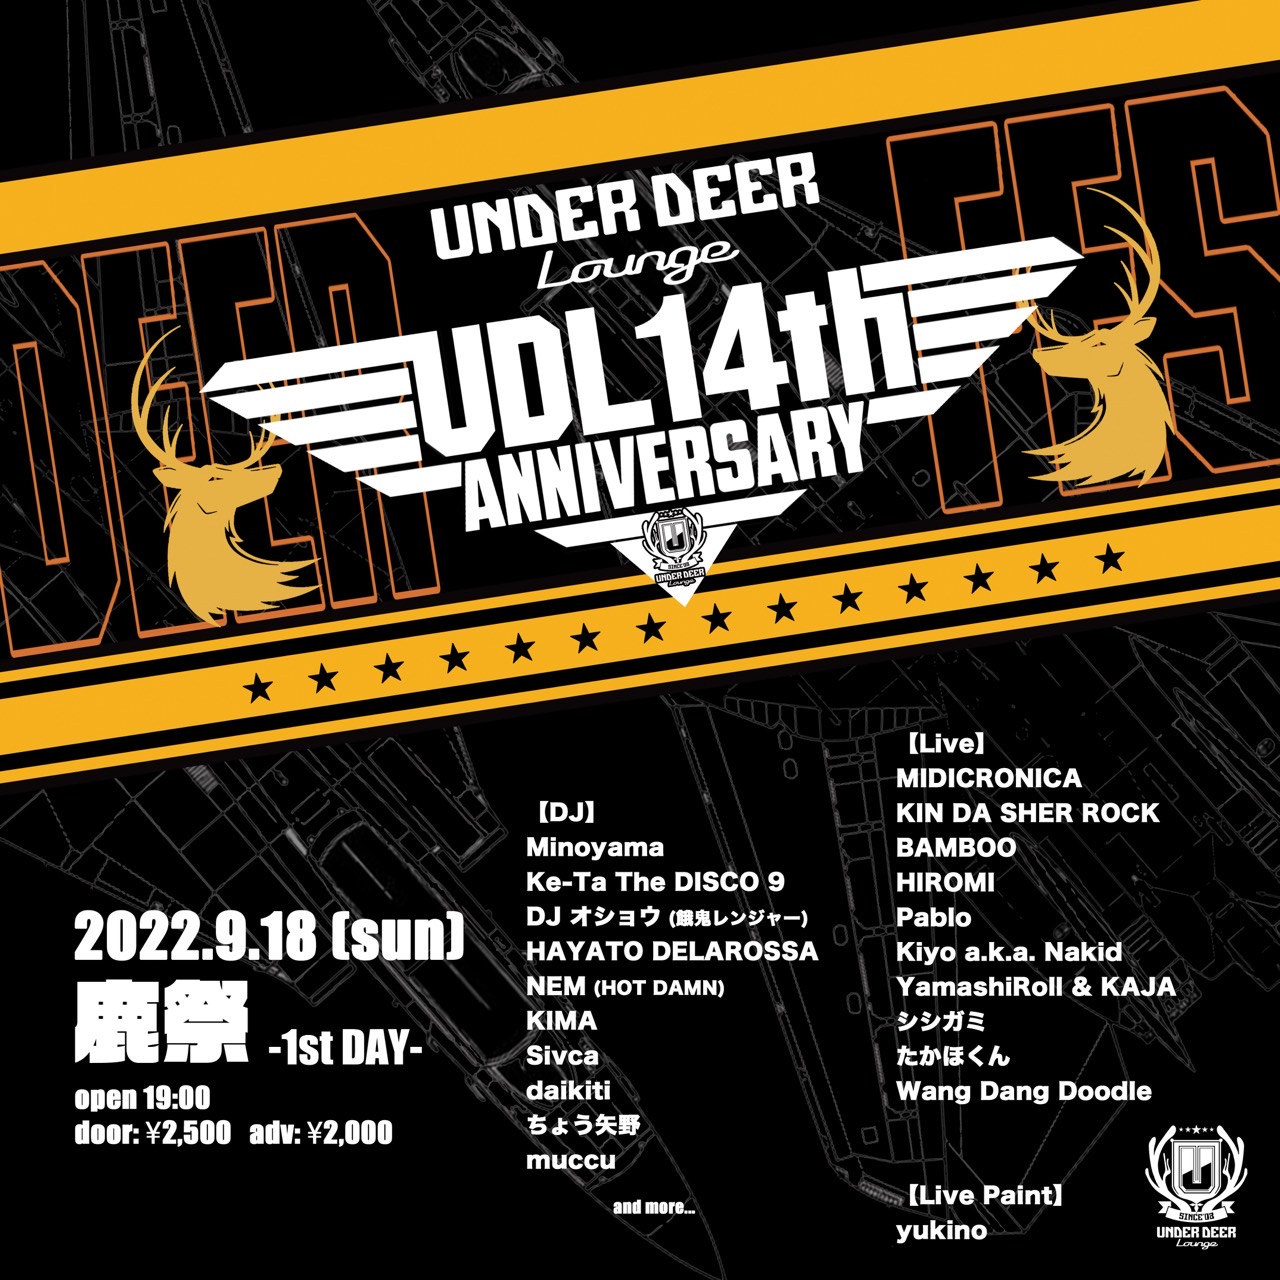 2022.9.18(sun) UNDER DEER Lounge 14th Anniversary︎ “鹿祭” 1st day @渋谷UNDER DEER Lounge